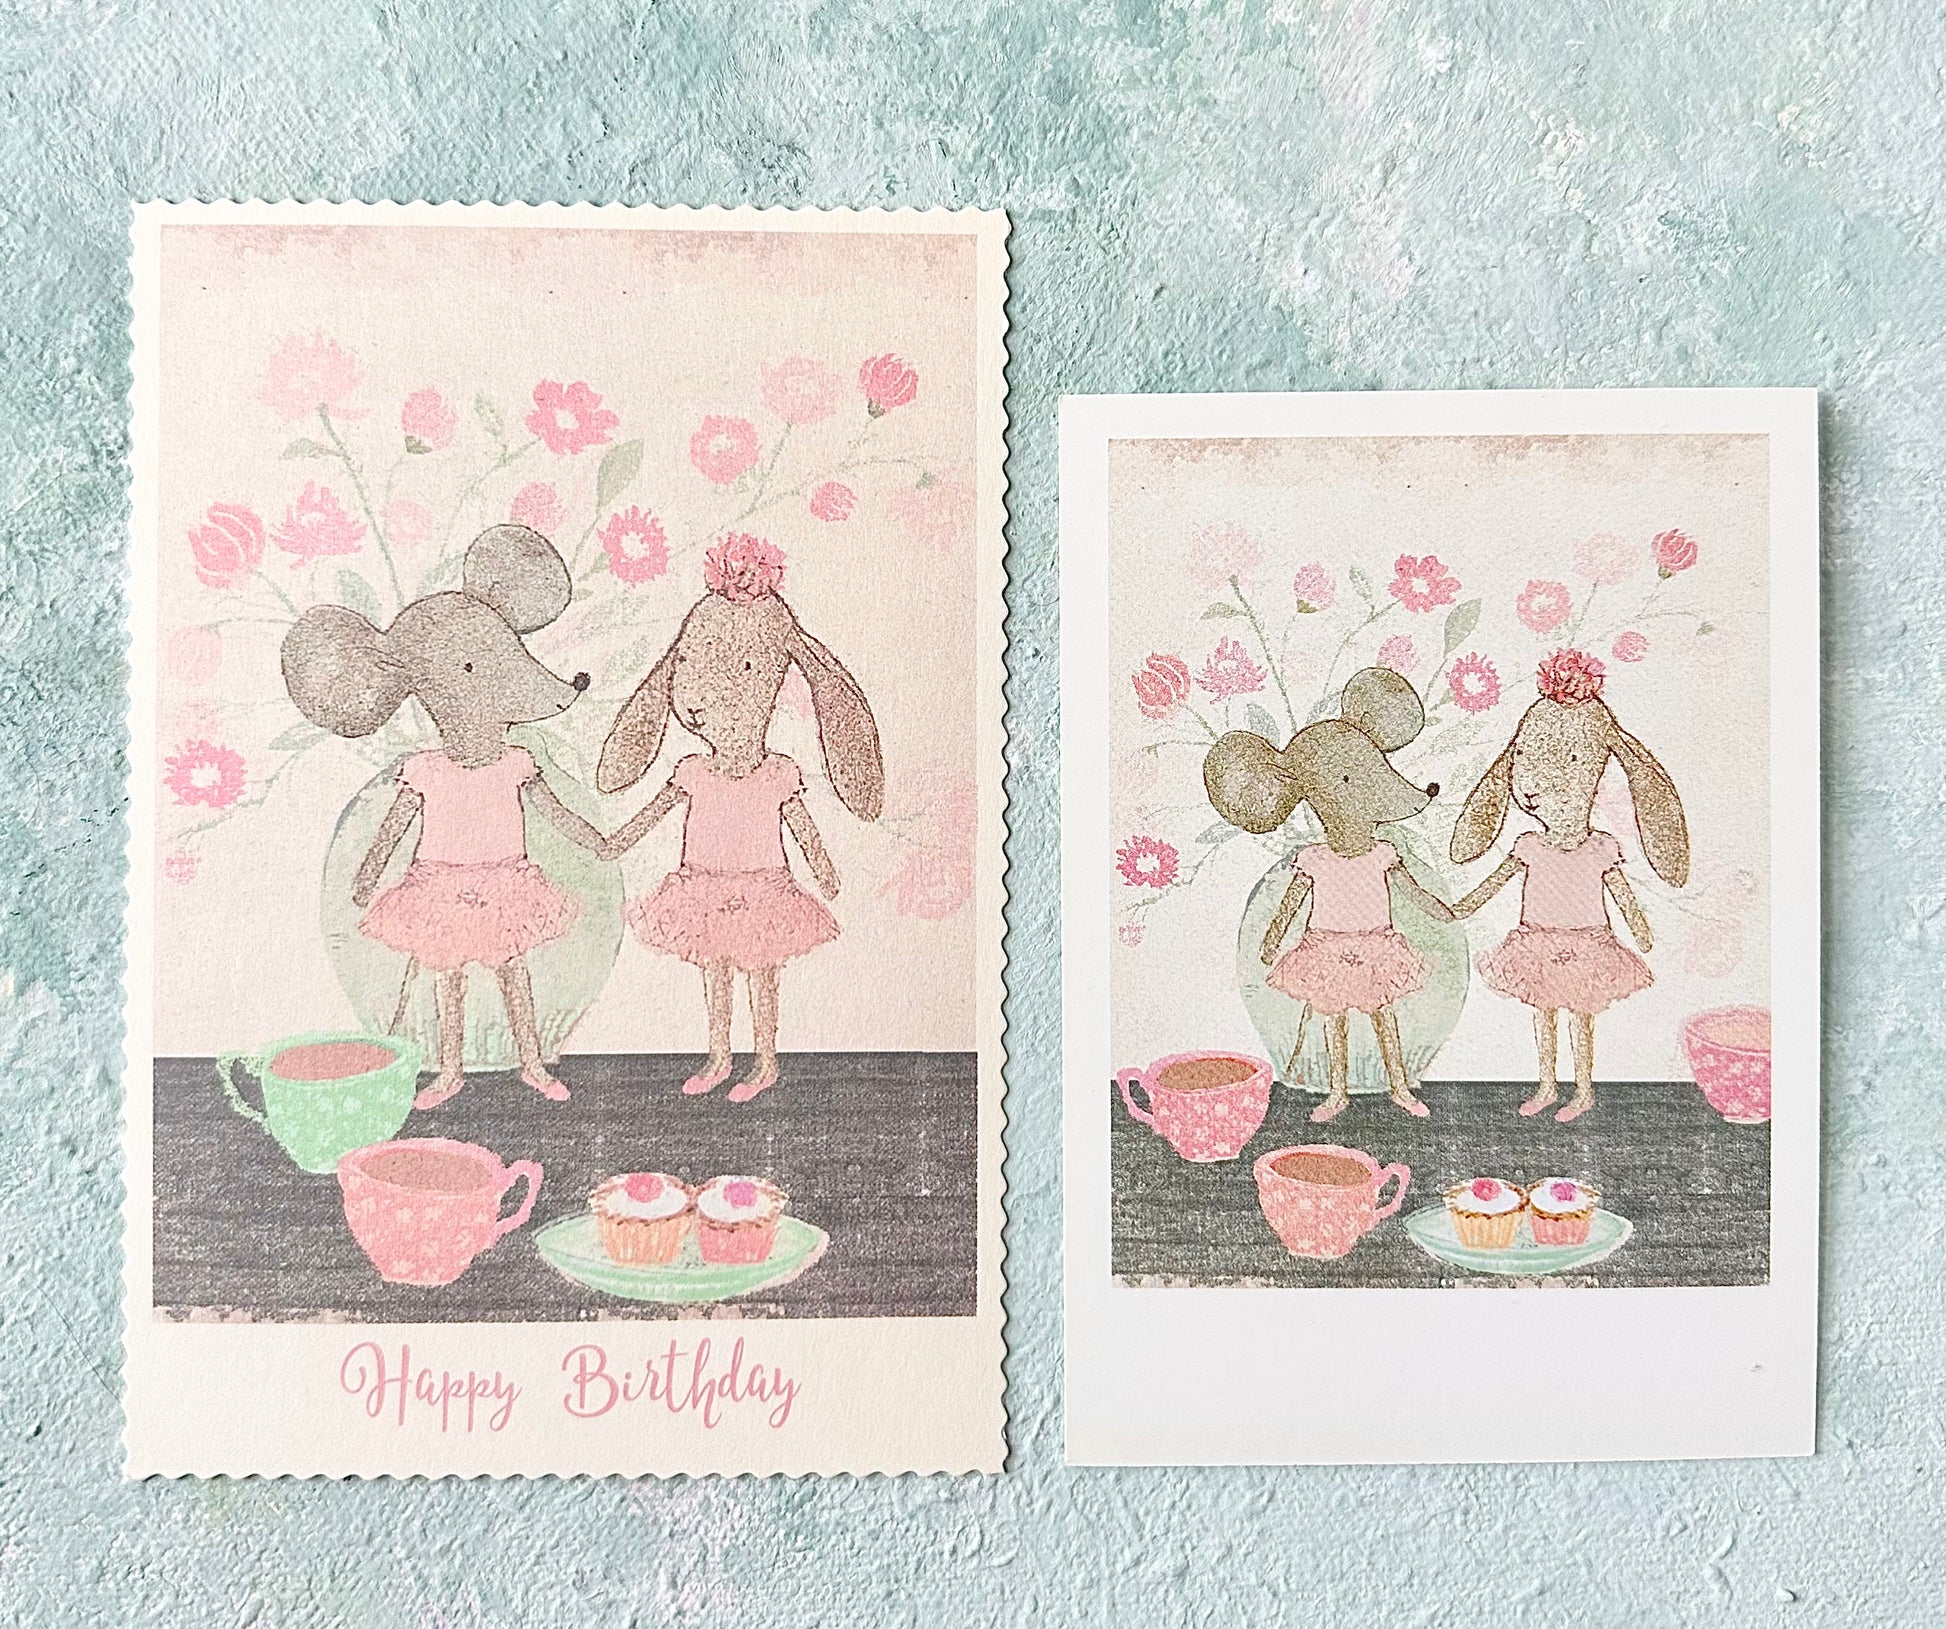 Small Birthday Card “Ballerinas” - 2018